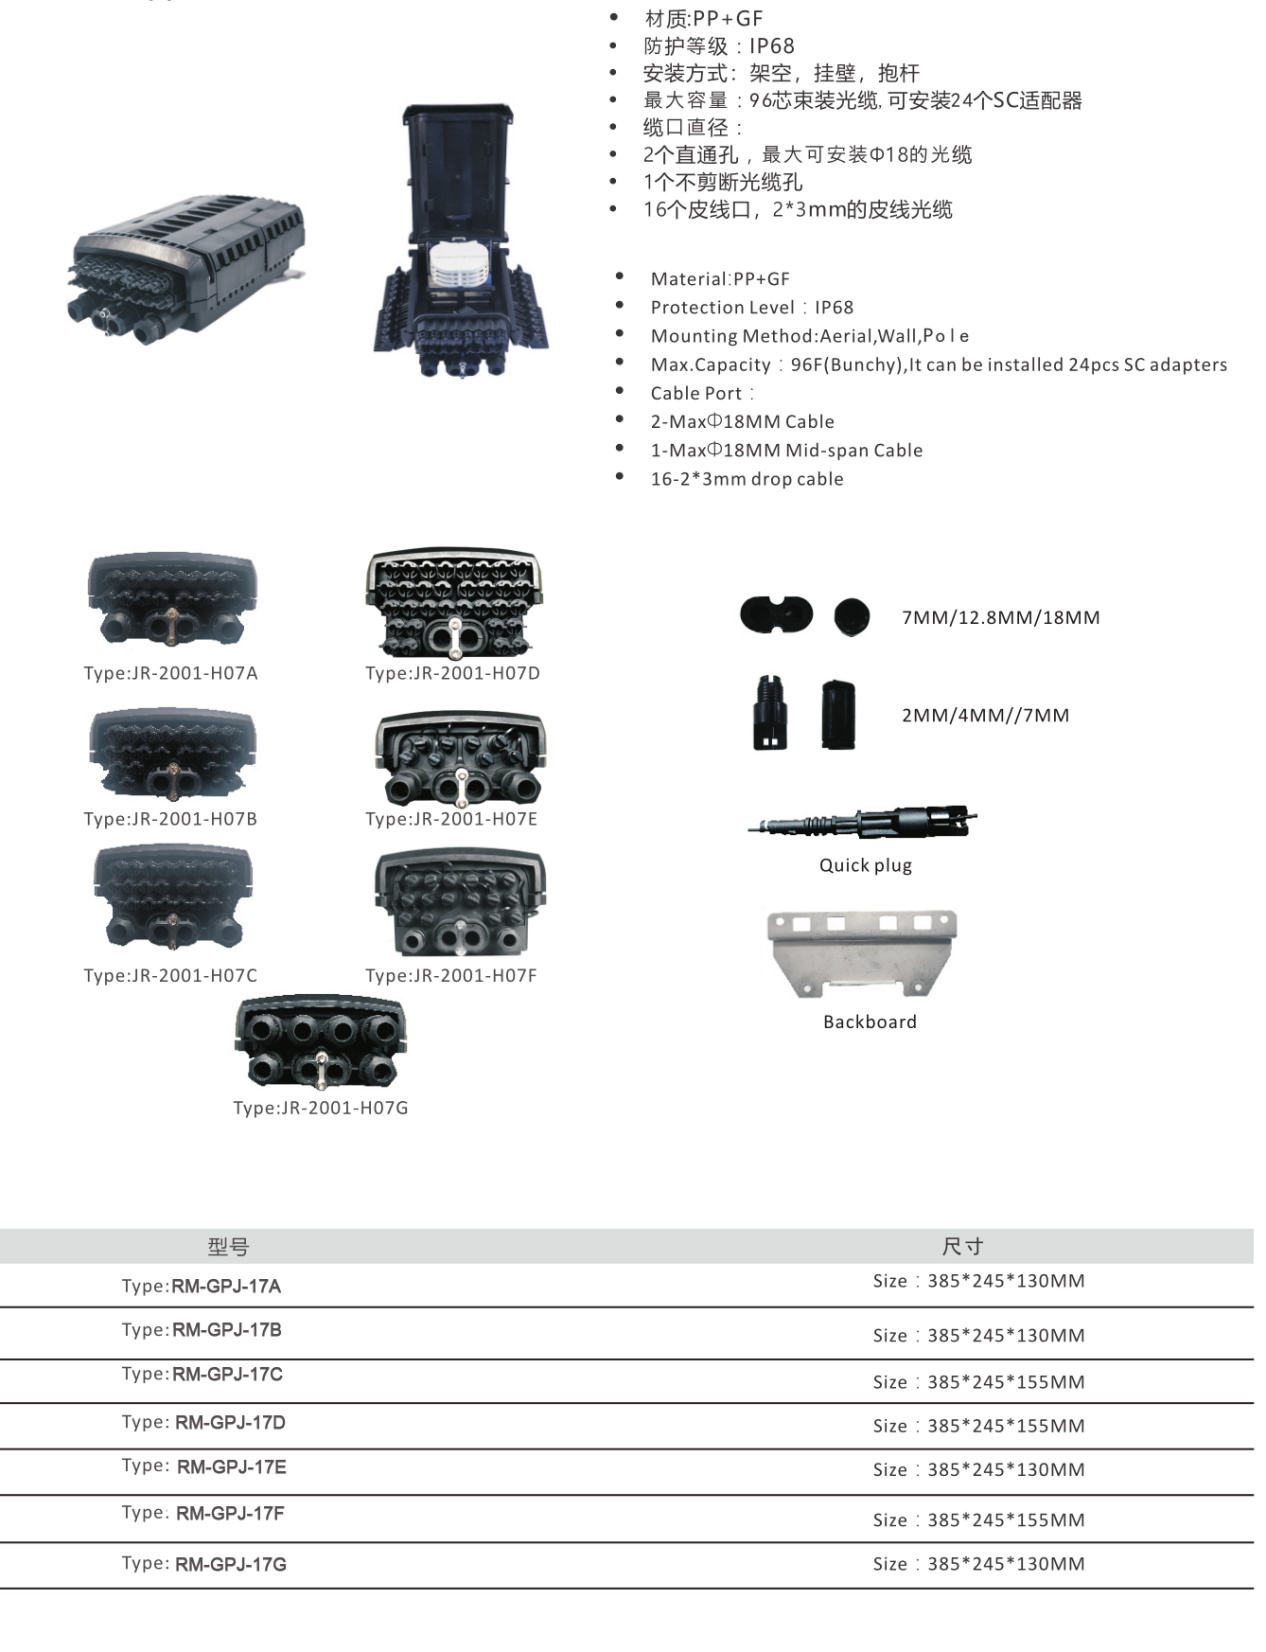 RM-GFX_Series محصولات 1701